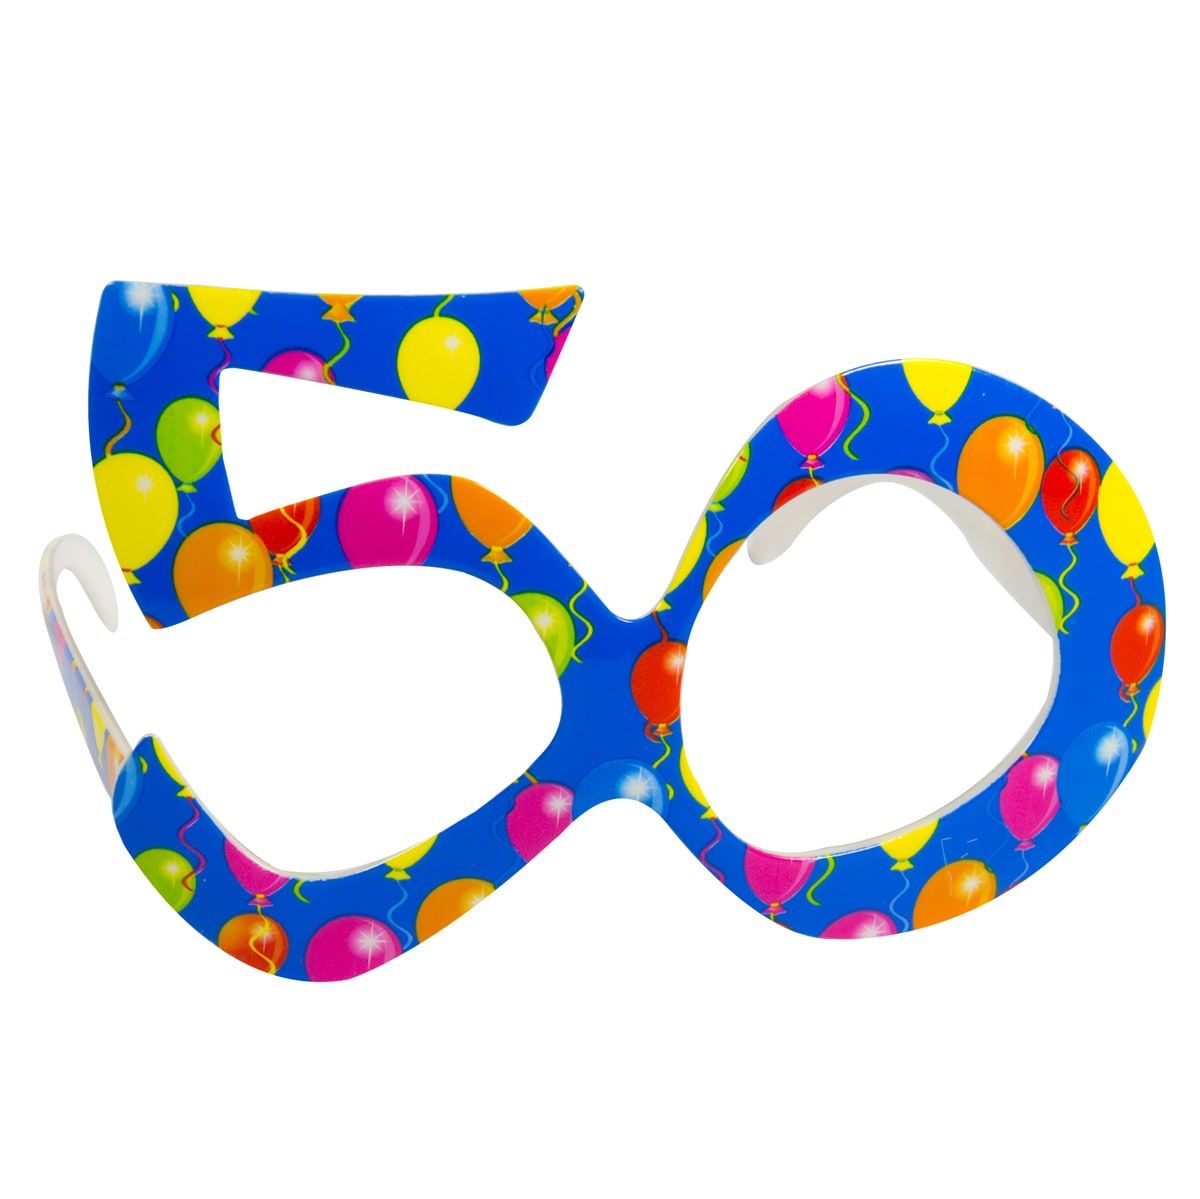 50 jaar ballonnen feest bril blauw